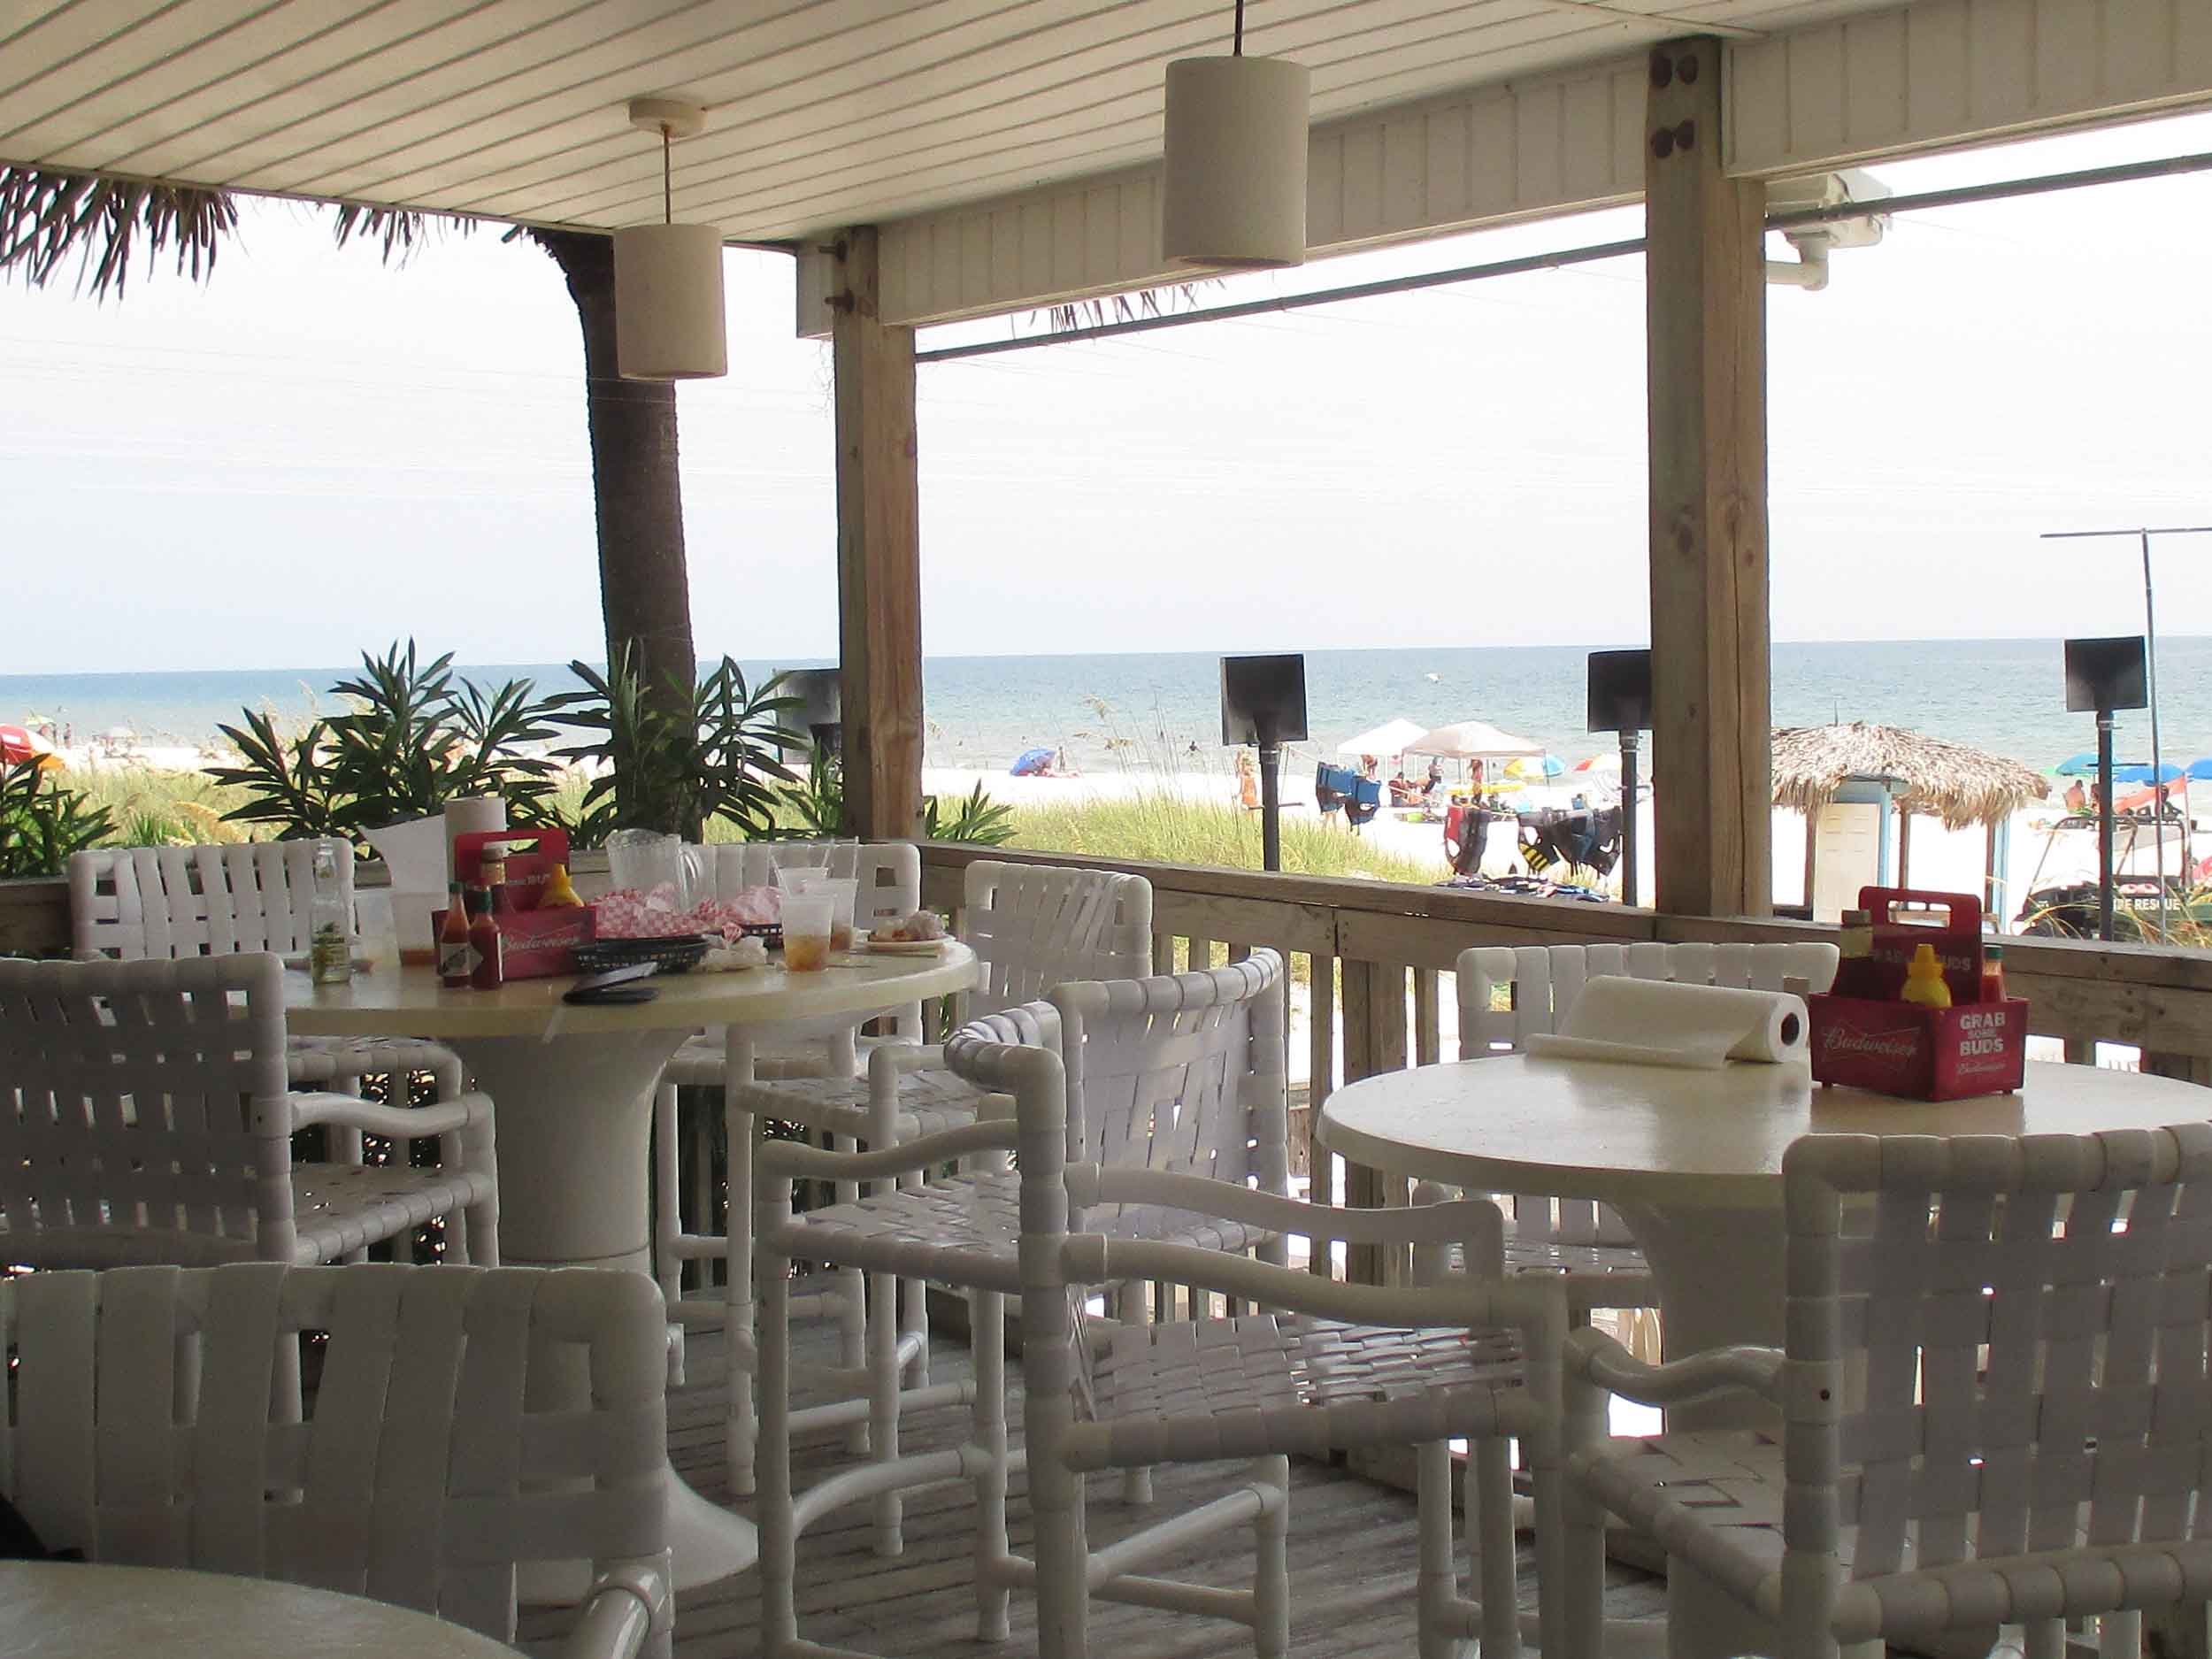 The Blue Parrot Oceanfront Cafe Patio Tables